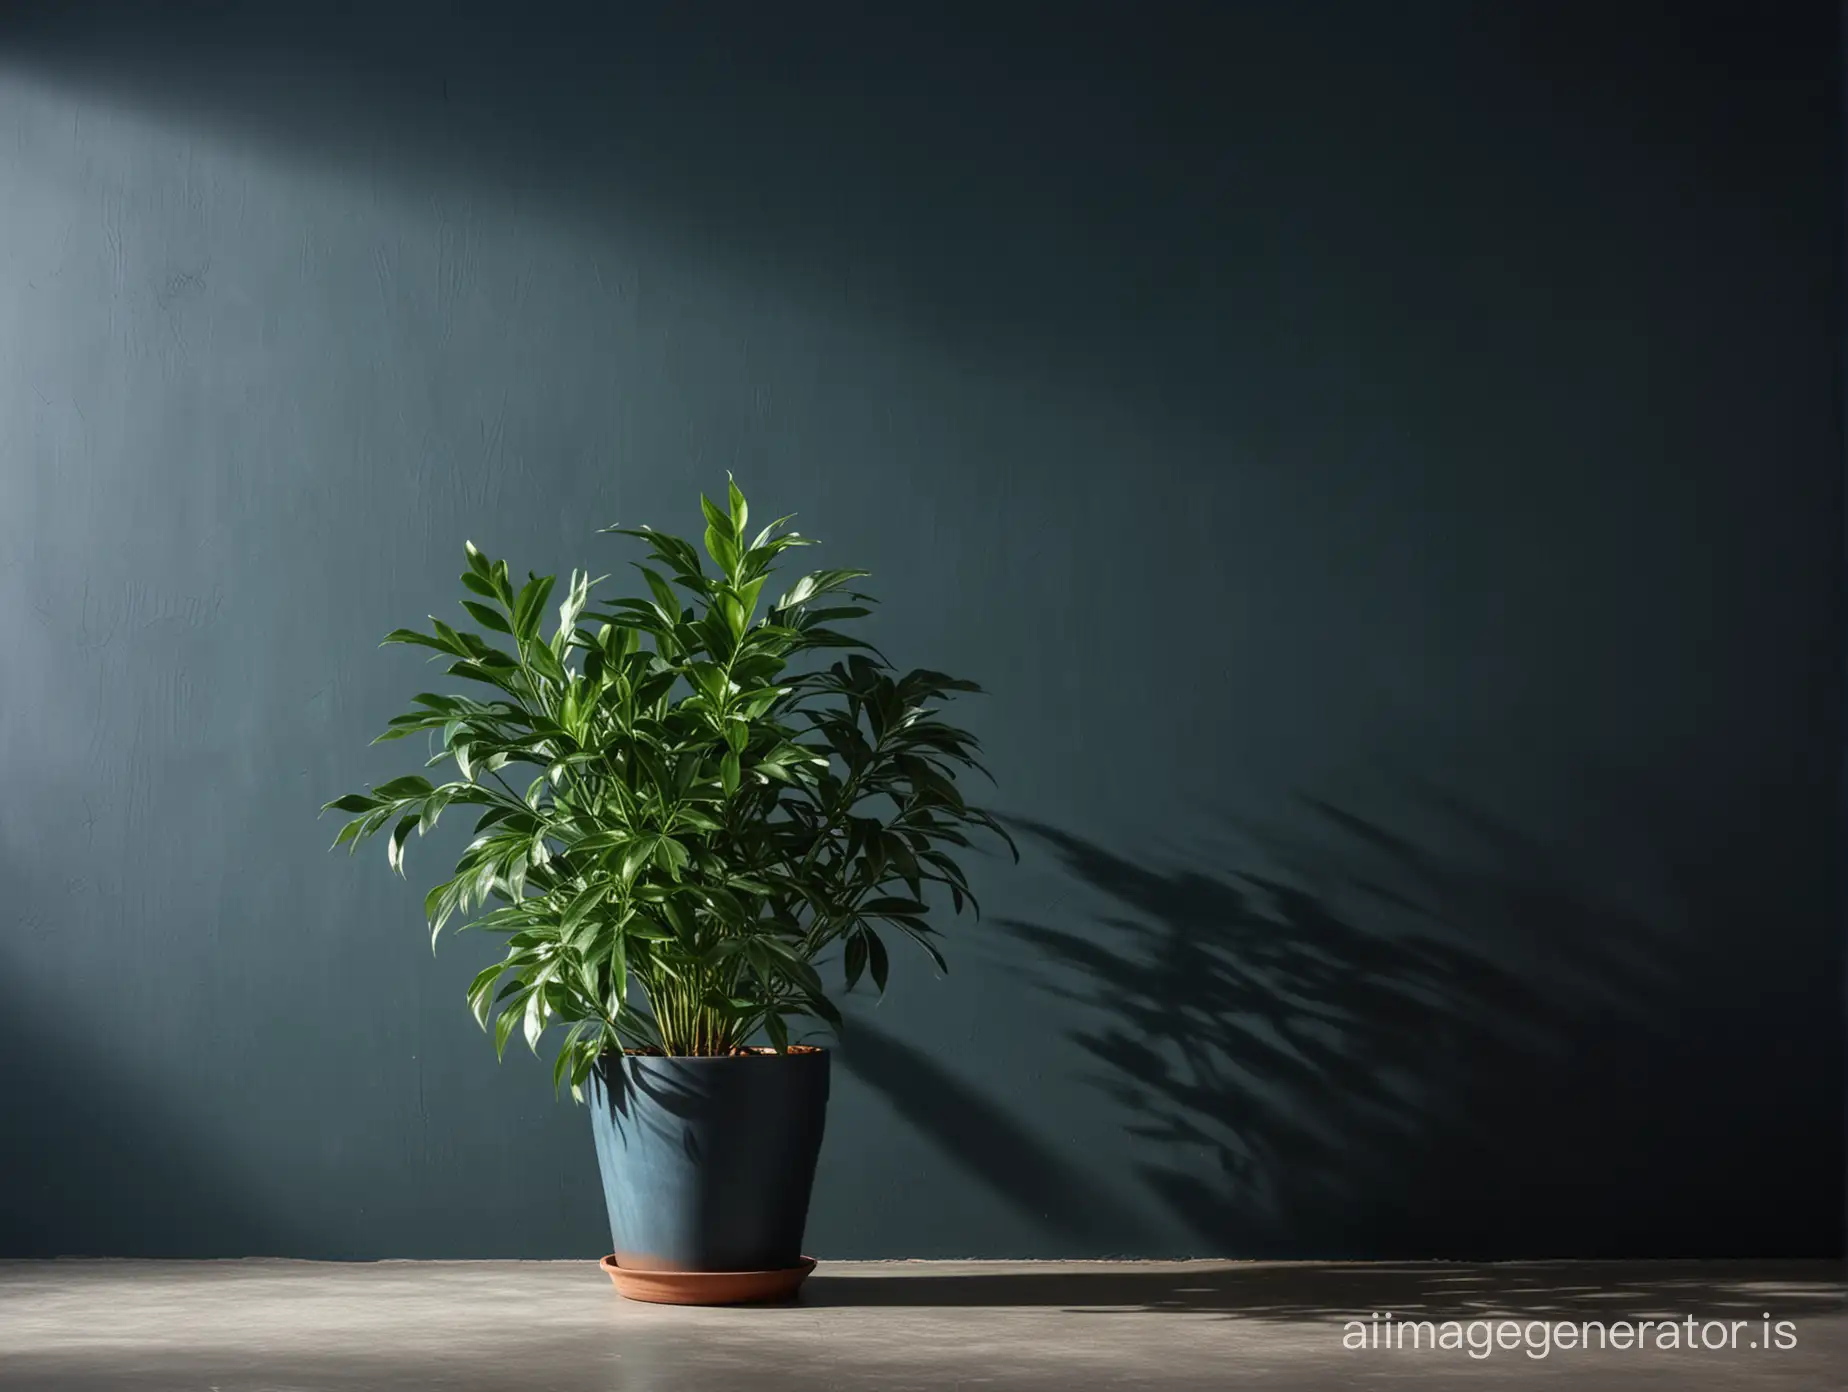 bluish dark plain background wall having shadow on it, green leafed plant on pot beside